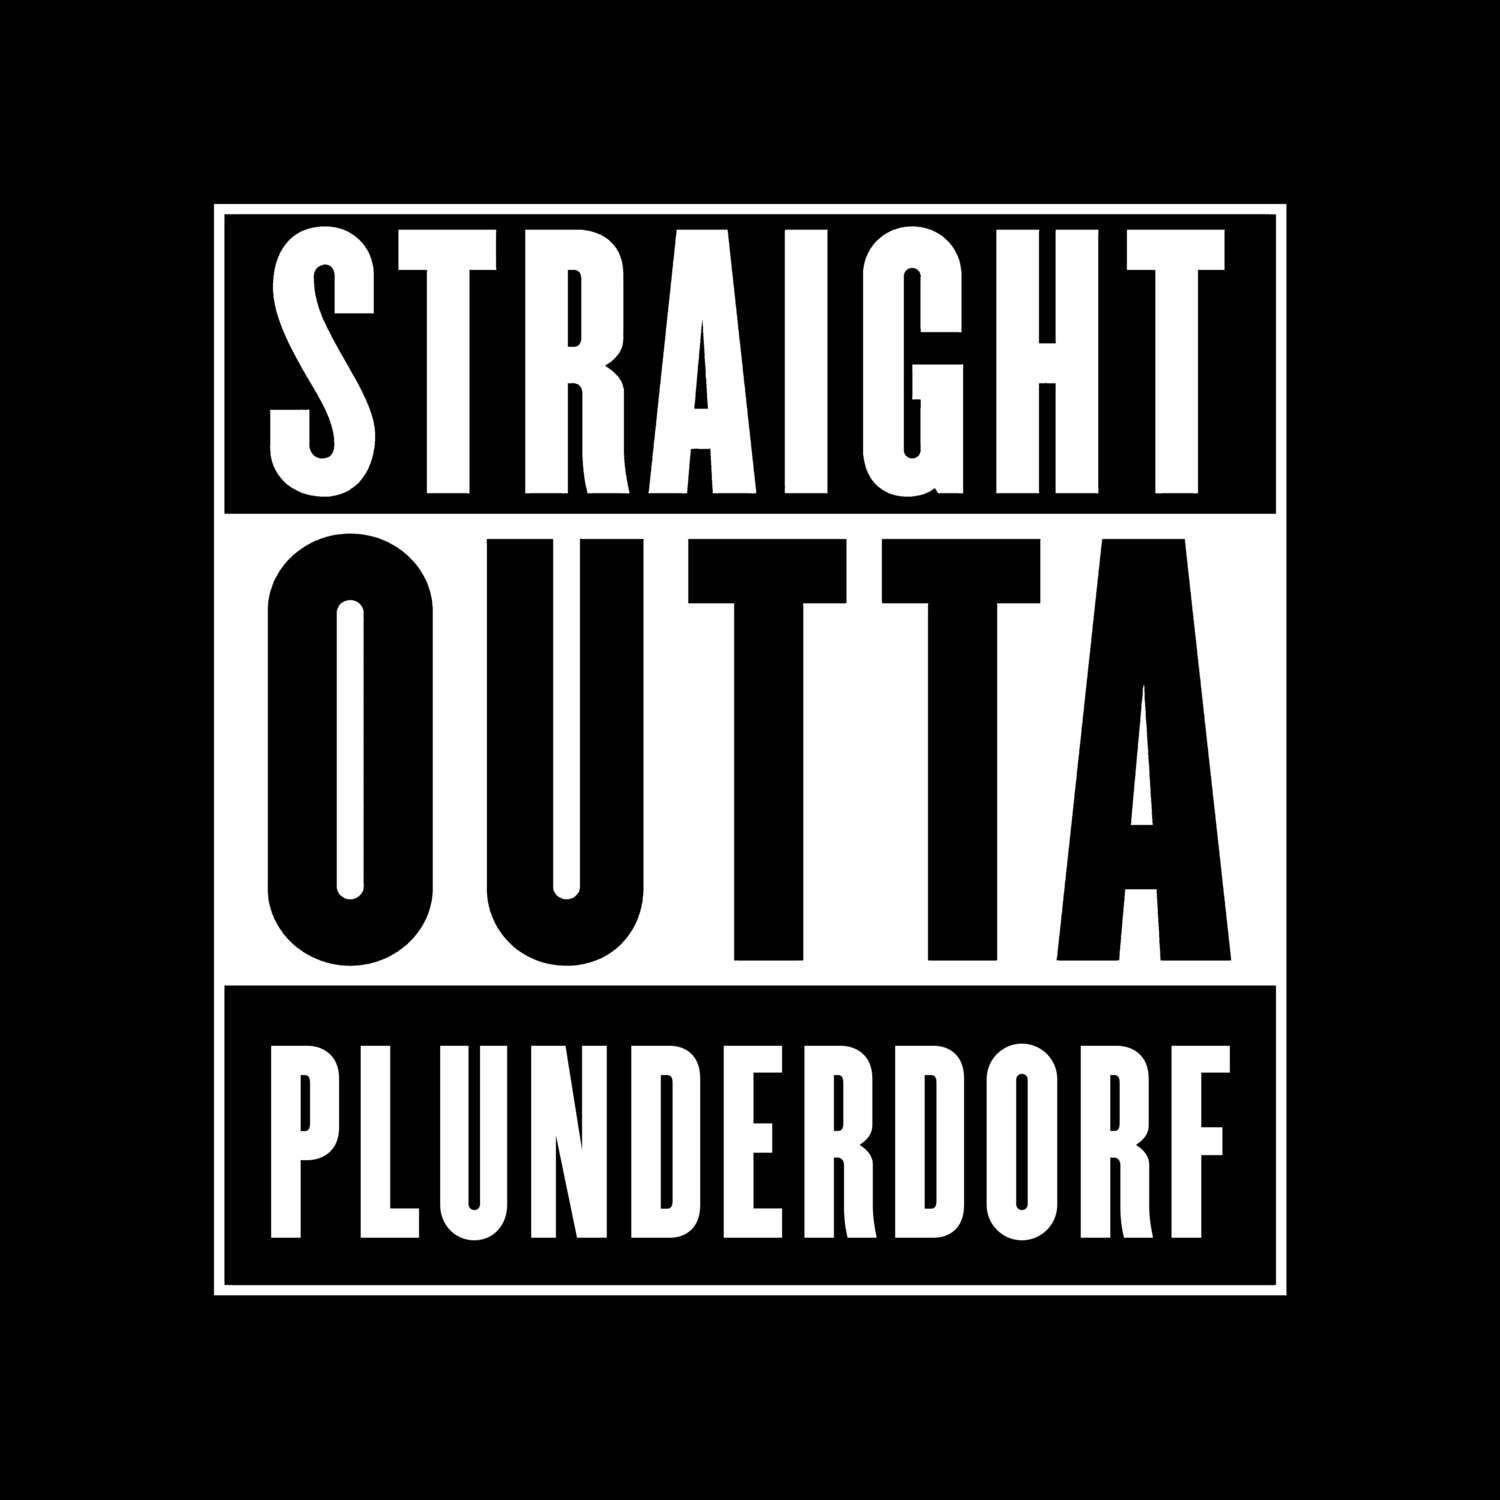 Plunderdorf T-Shirt »Straight Outta«